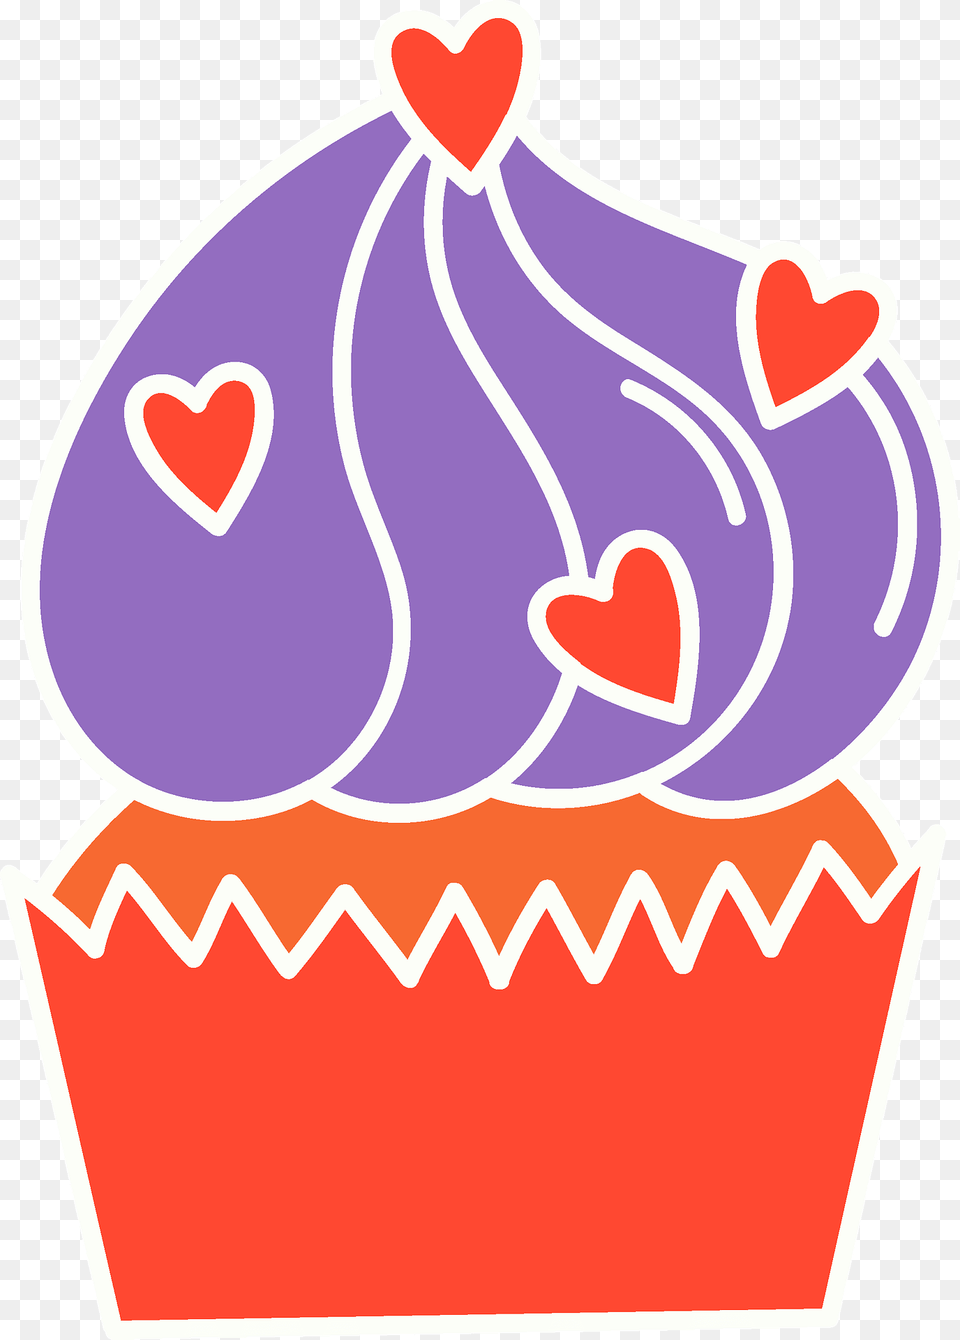 Cupcake Clipart, Cake, Cream, Dessert, Food Png